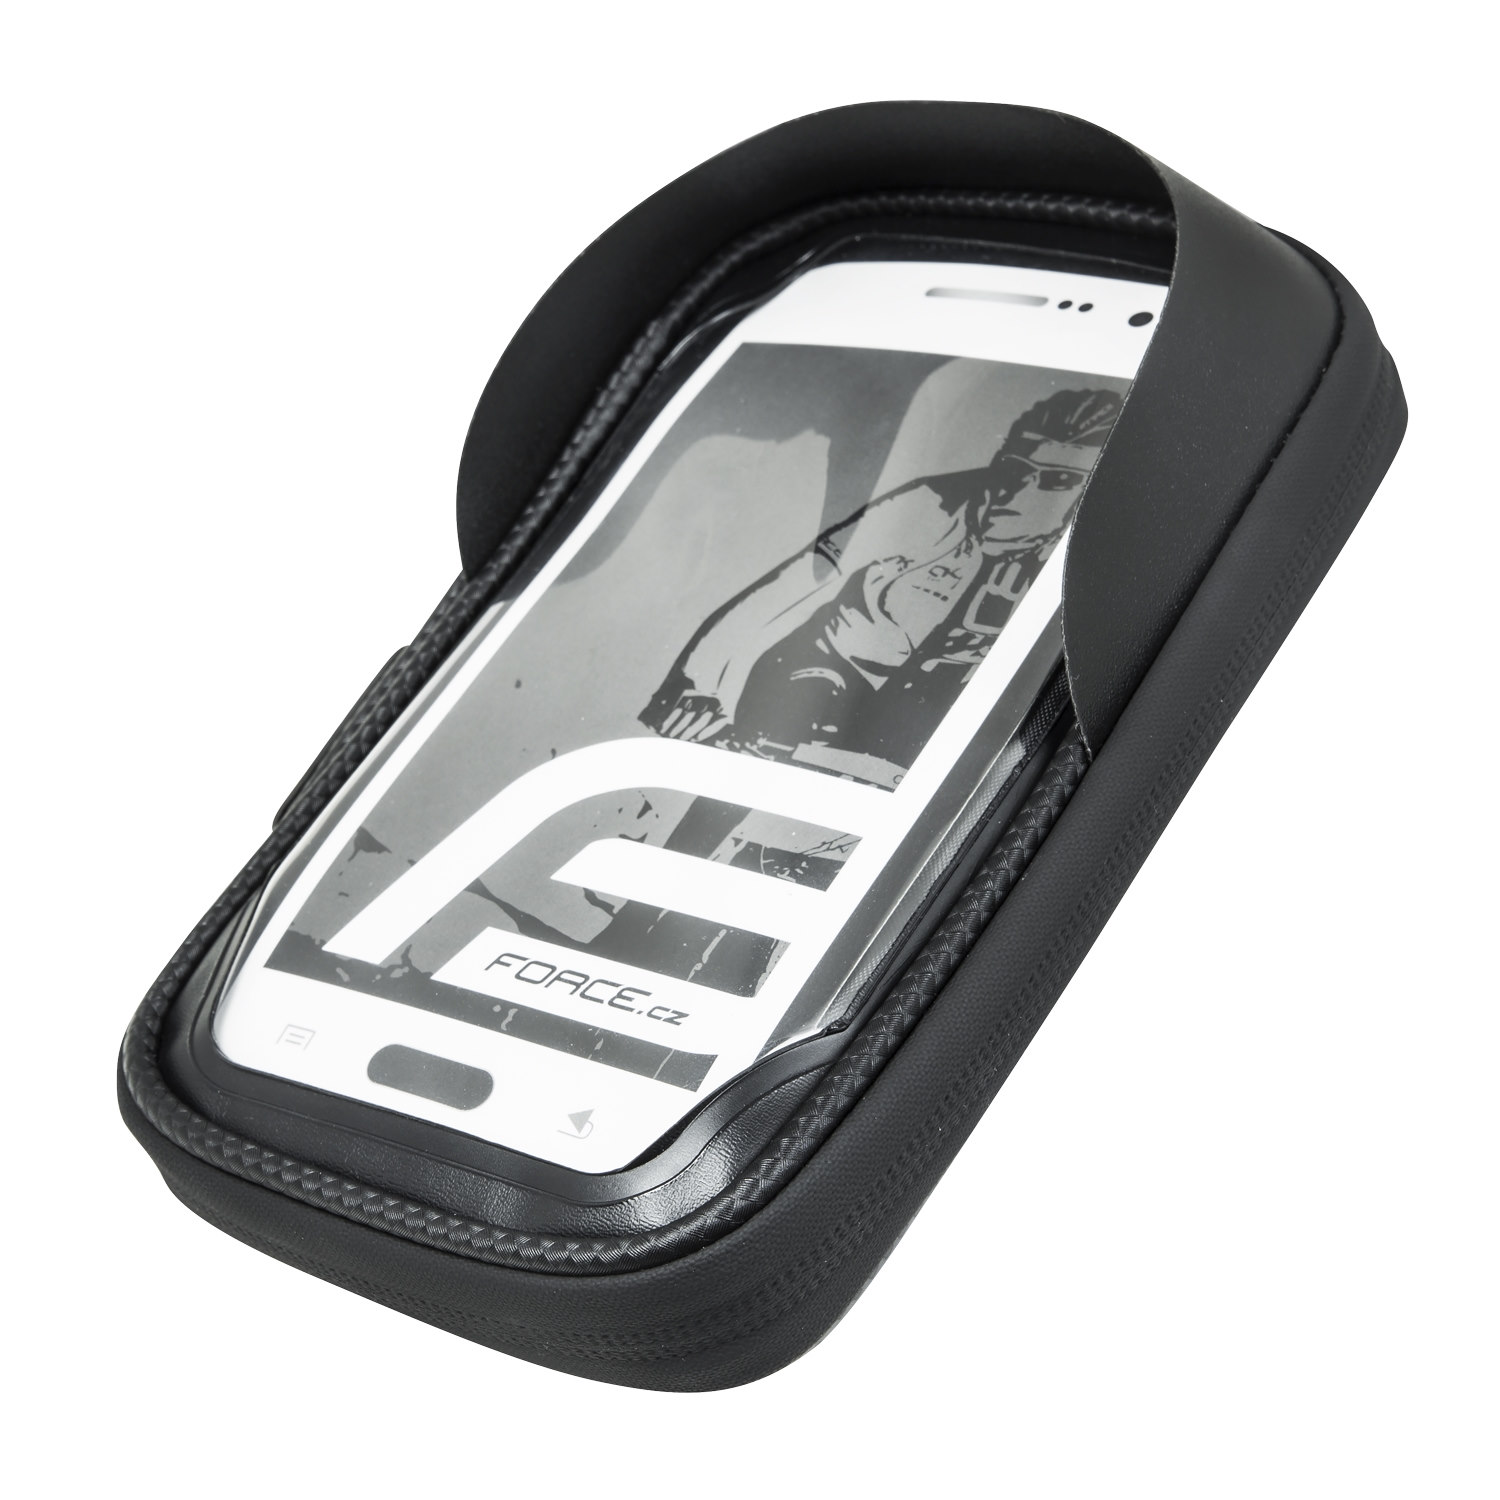 Full Body Scanner — раздевает касанием пальца на Android